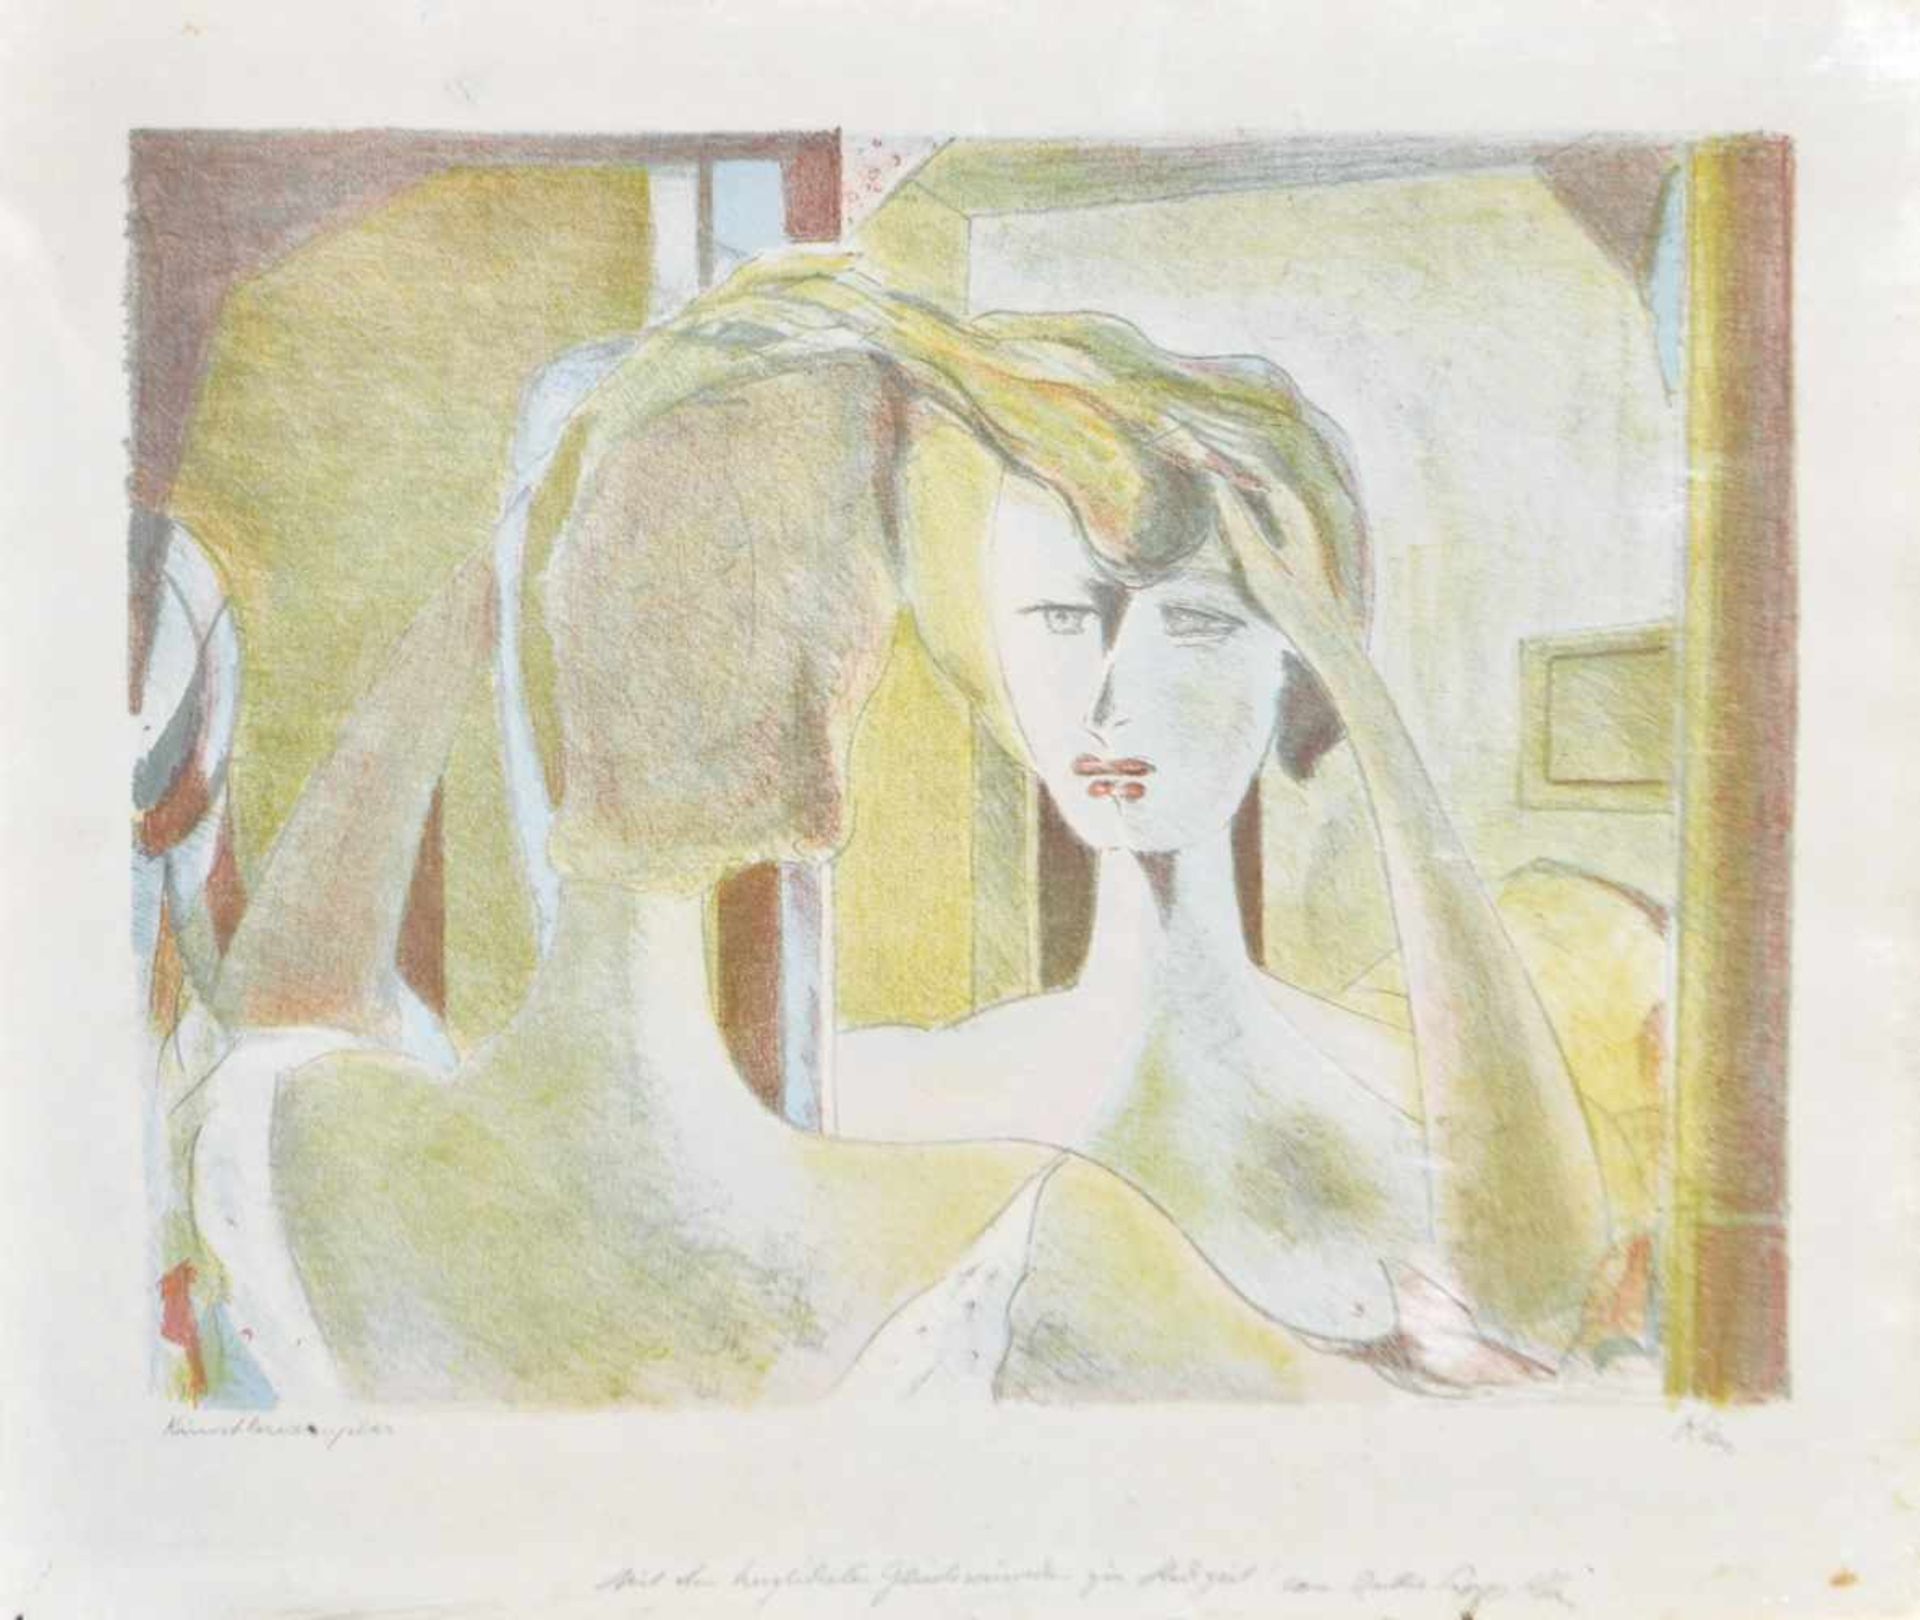 Kien (Josef Kienlechner) (Dessau 1903  Bracciano 1985)Im Spiegel;Lithografie, 43 x 52 cm